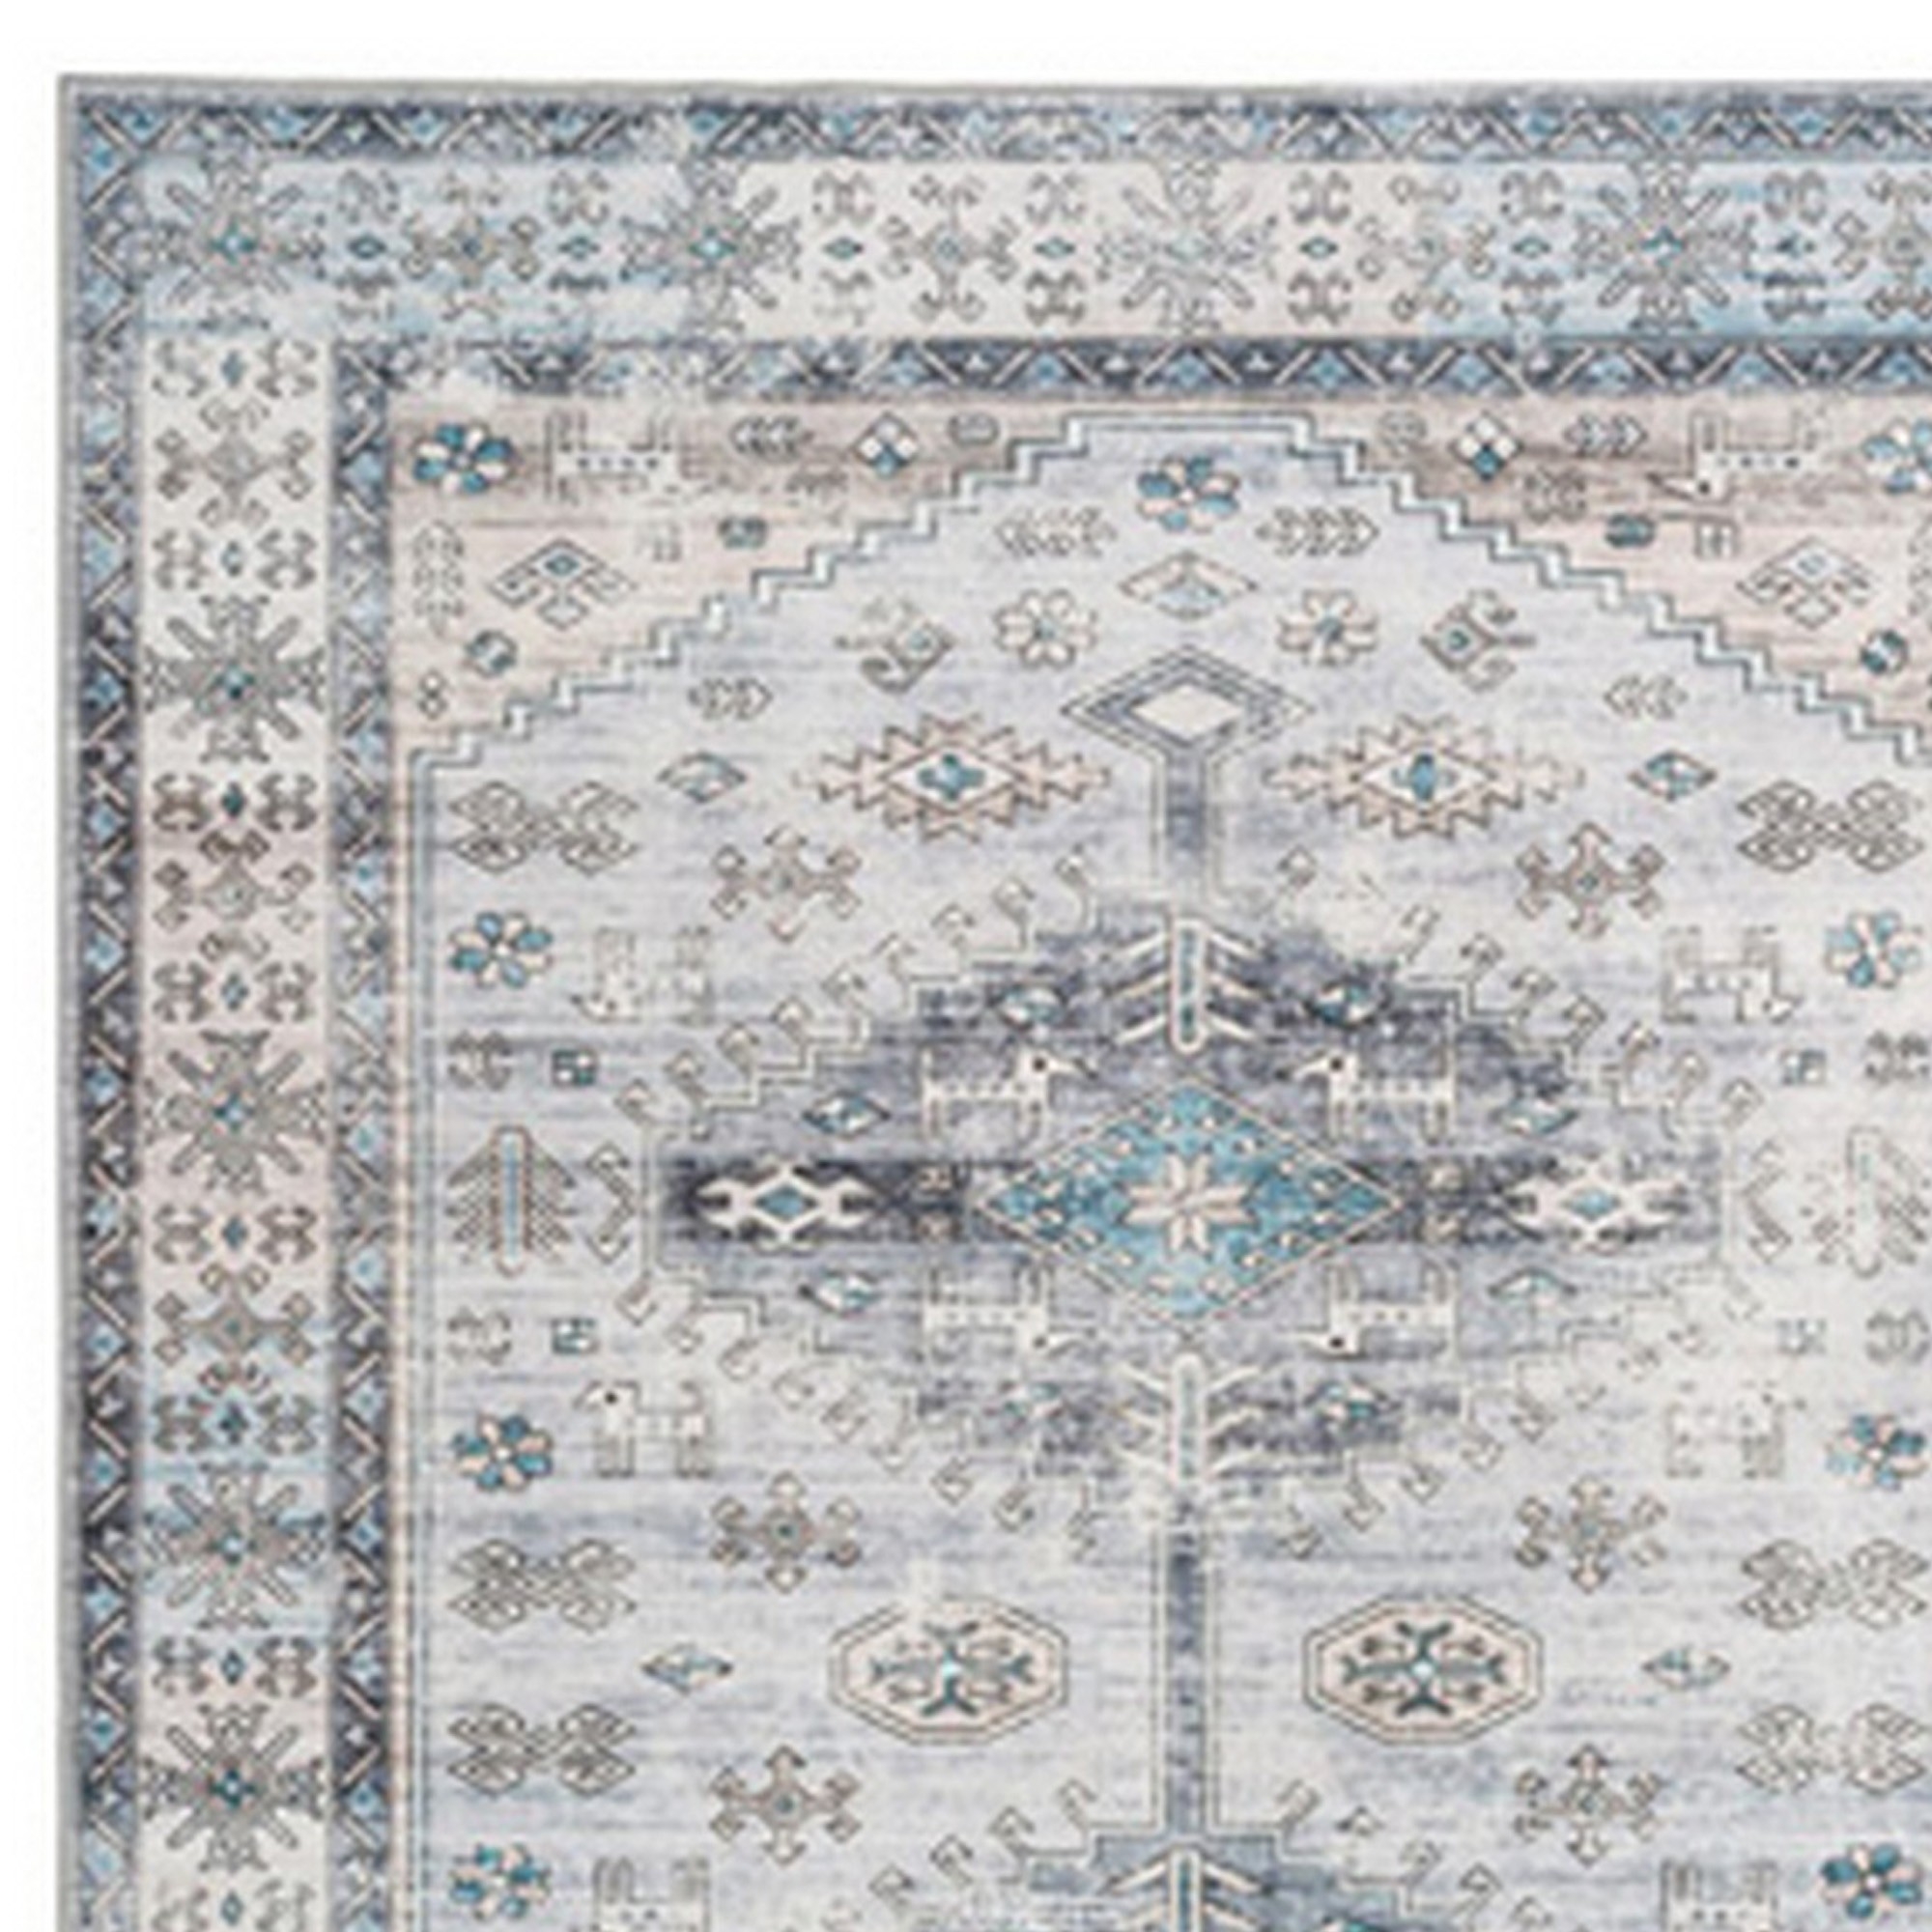 Nyx 10 X 8 Large Soft Fabric Floor Area Rug, Vintage Blue Border Design- Saltoro Sherpi